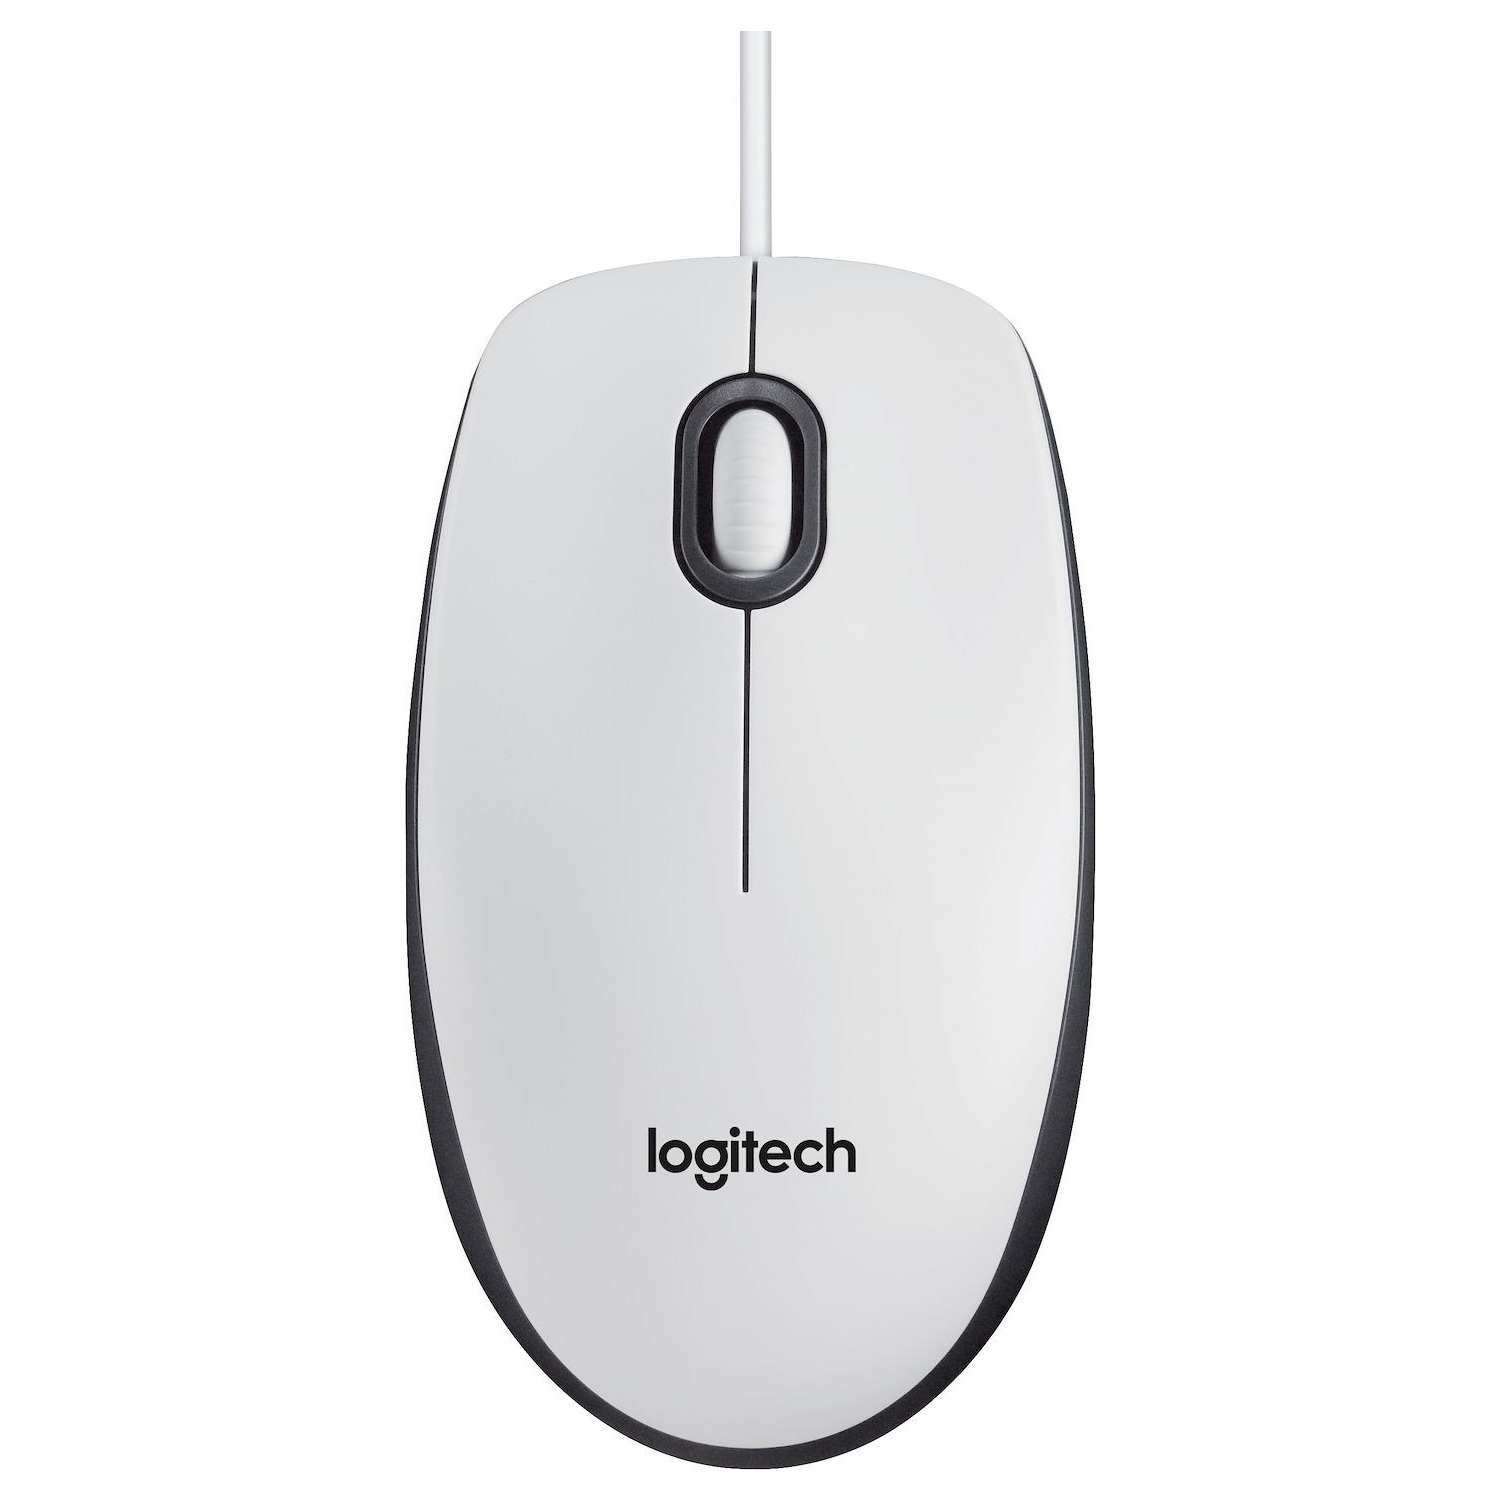 Immagine per Mouse Logitech M100 bianco da DIMOStore